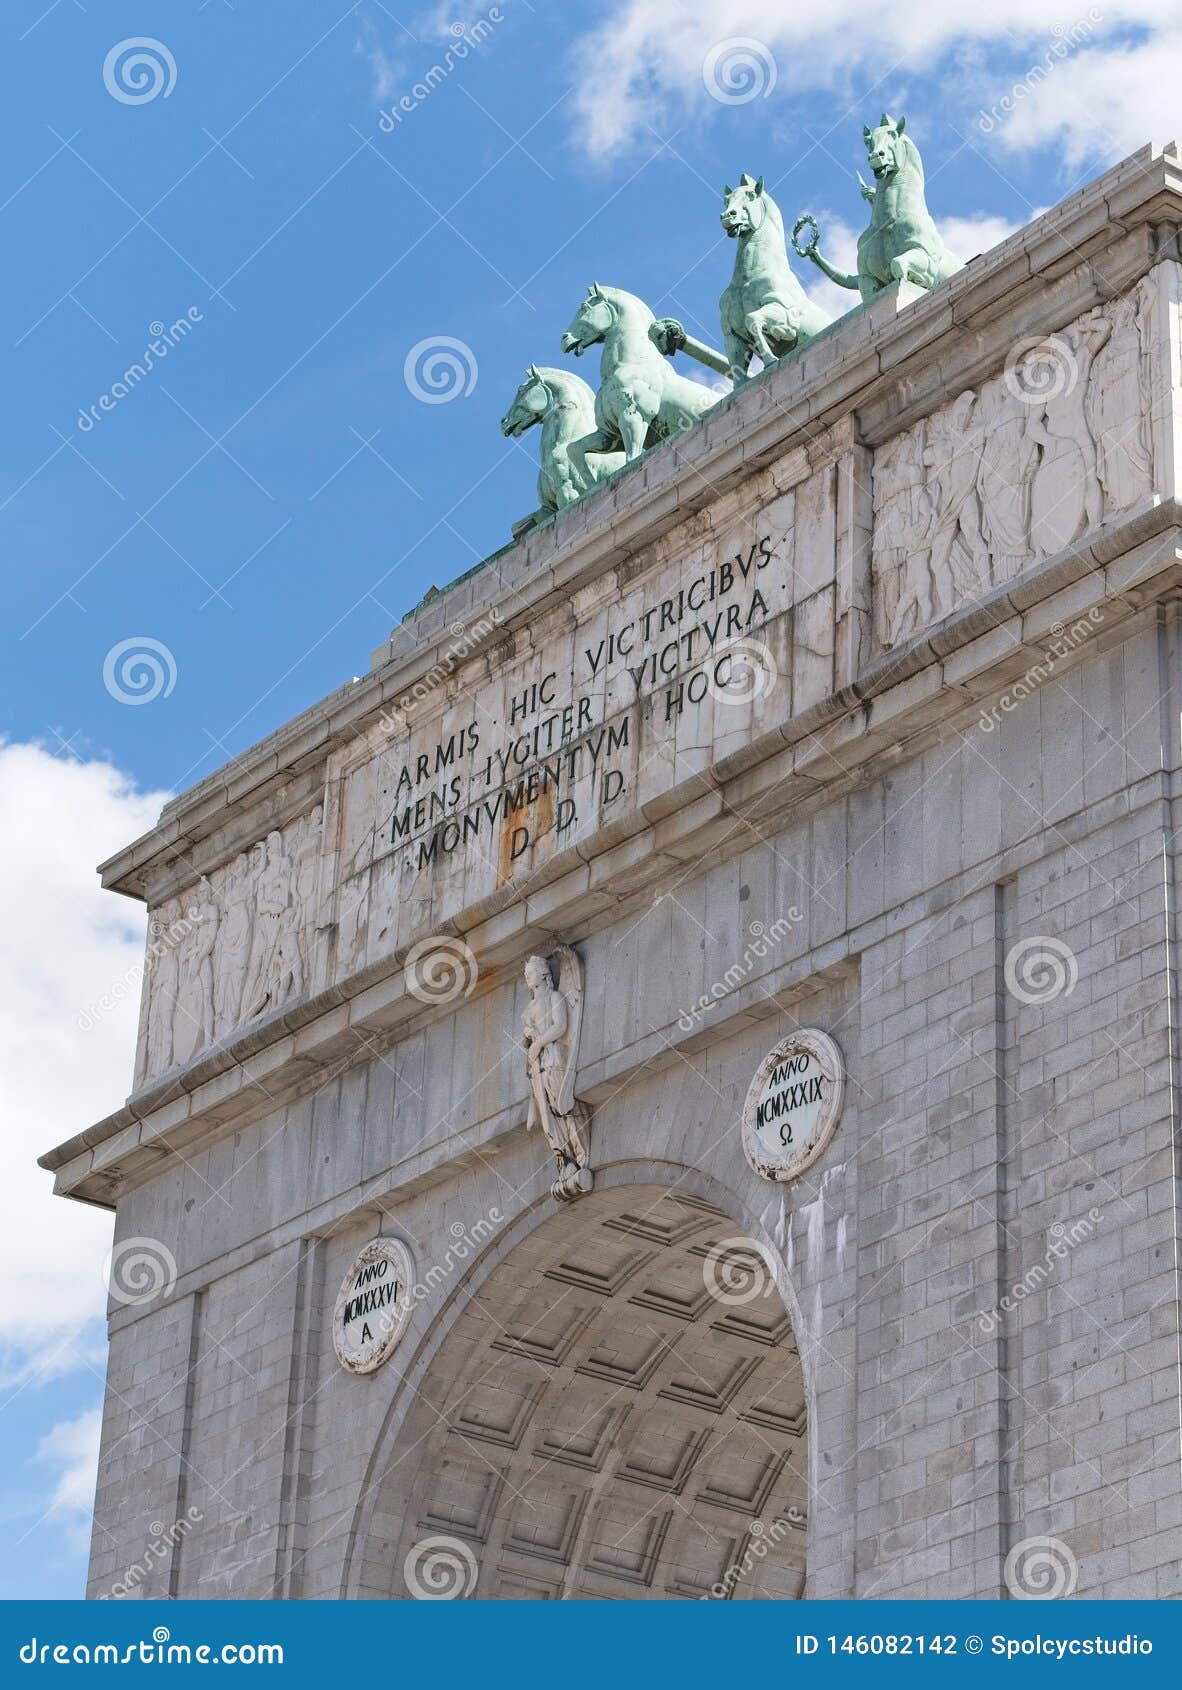 arco de la victoria victory arch is a triumphal arch built in the moncloa, madrid, spain.